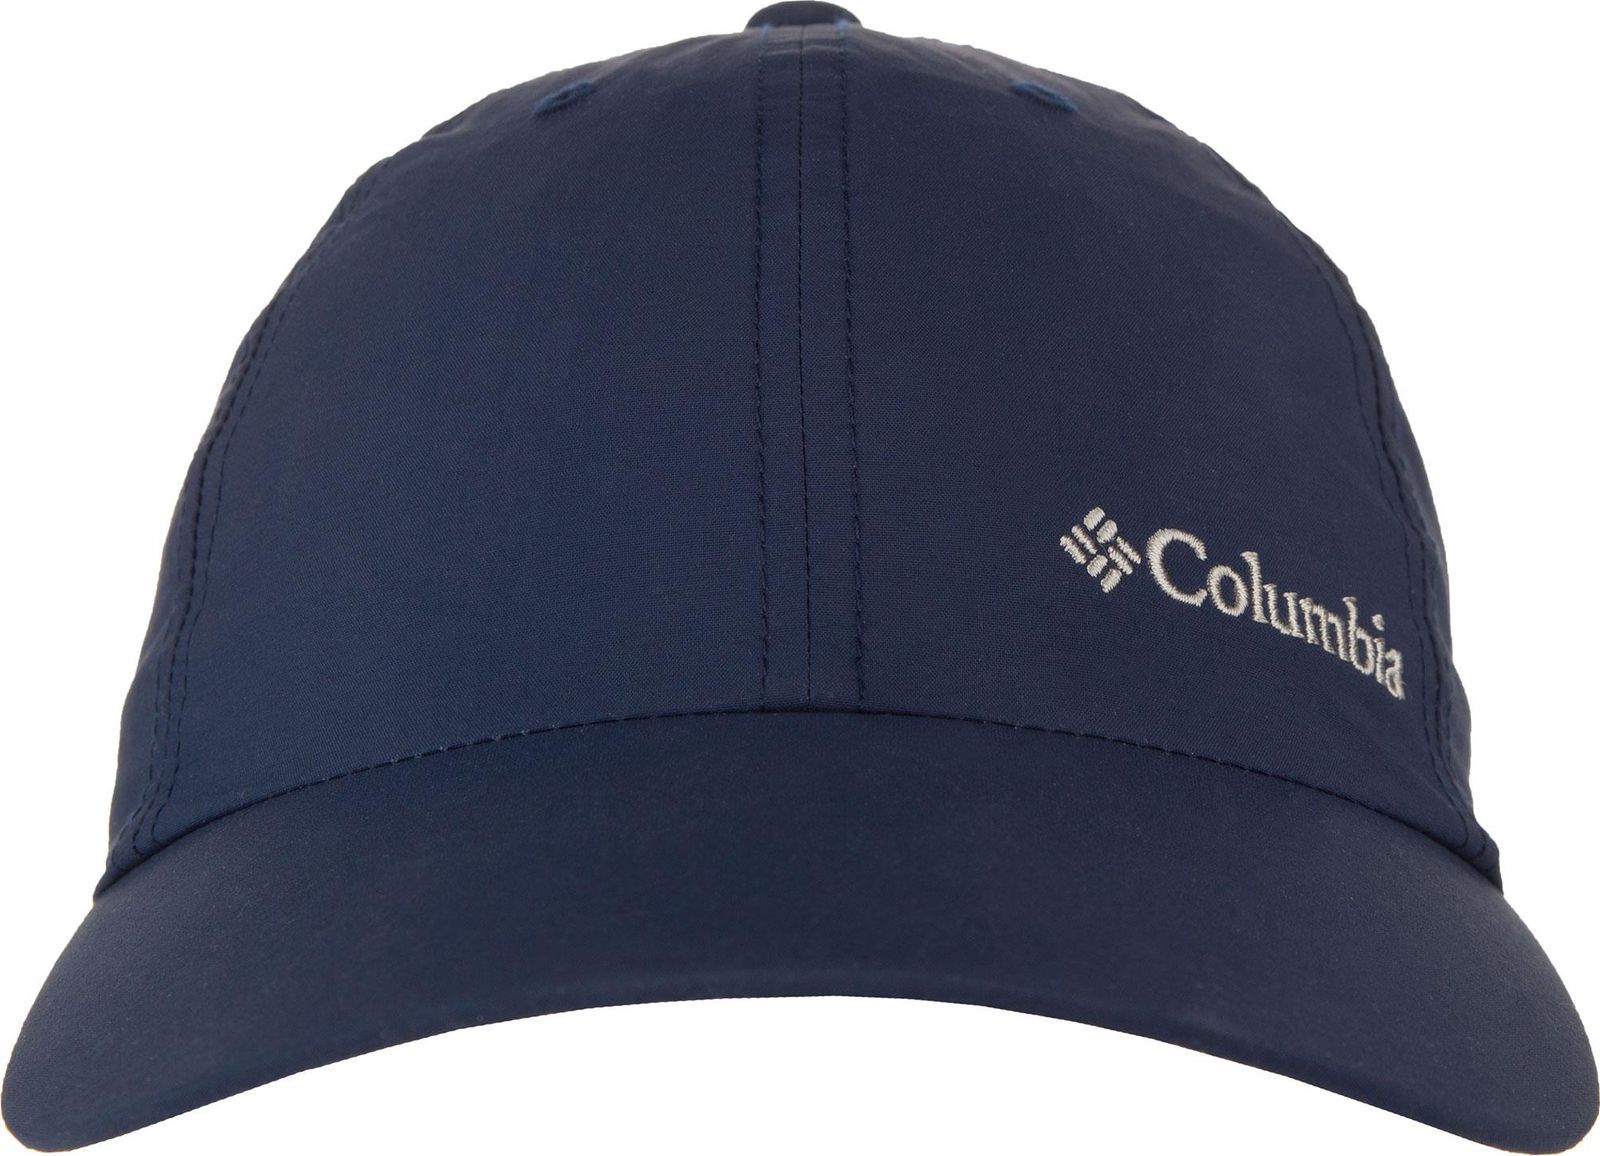  Columbia Tech Shade II Hat, : -. 1819641-464.  